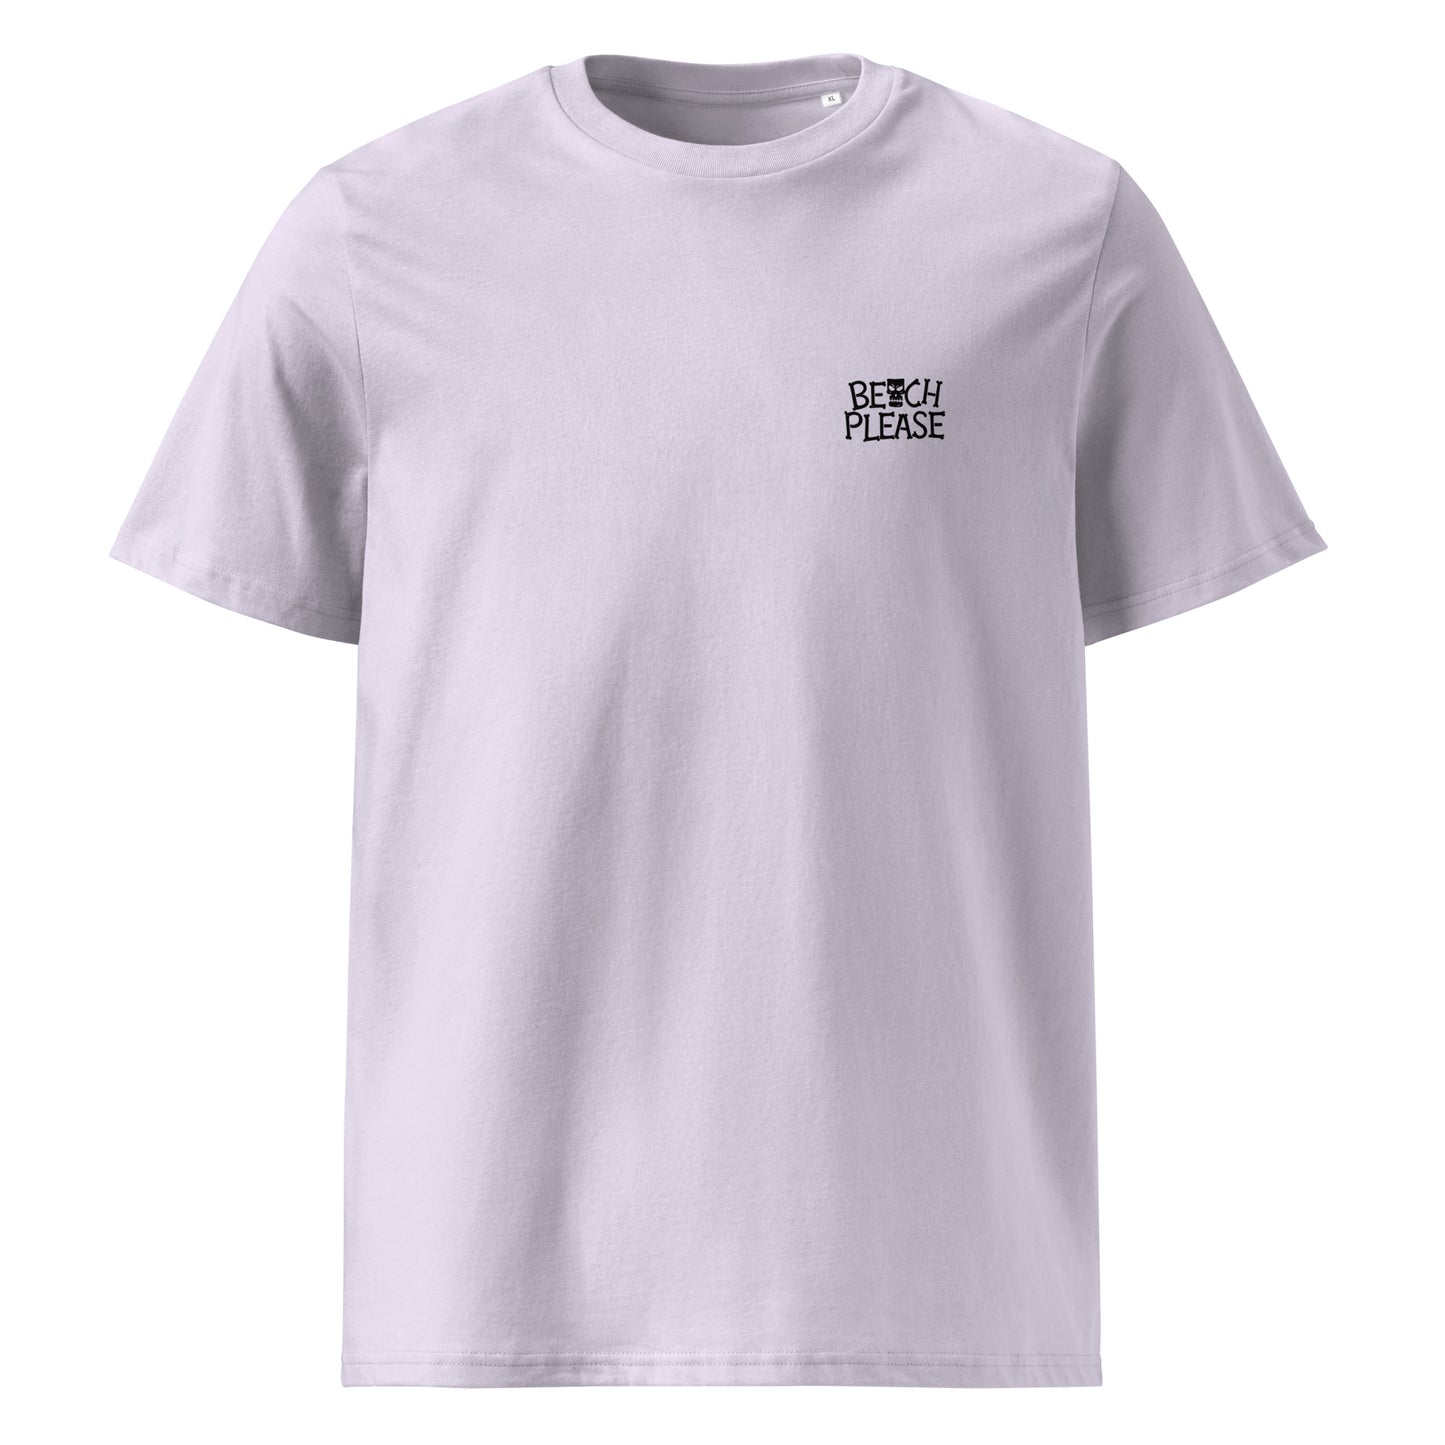 Tiki Skull (Modell B) - Premium T-Shirt mit 2-seitigem Druck